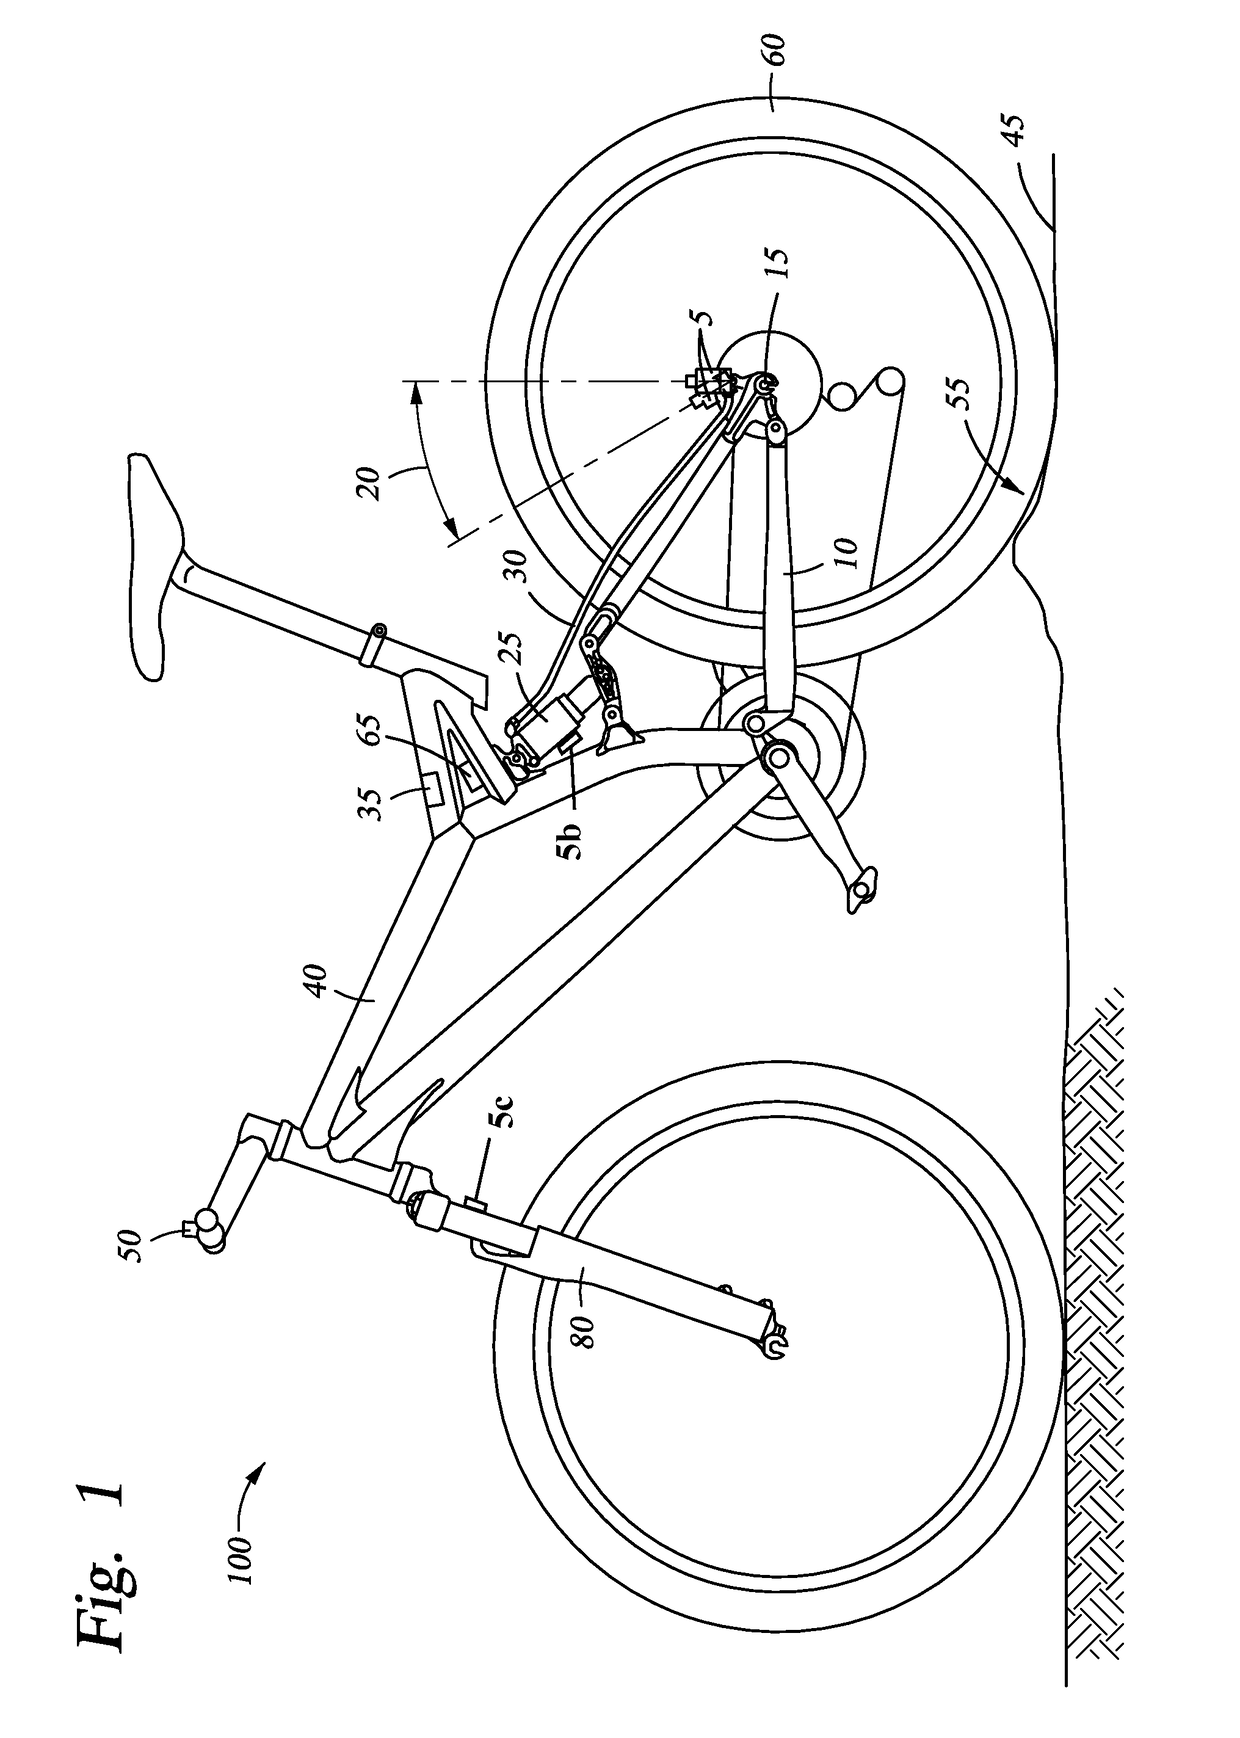 Methods and apparatus for suspension adjustment